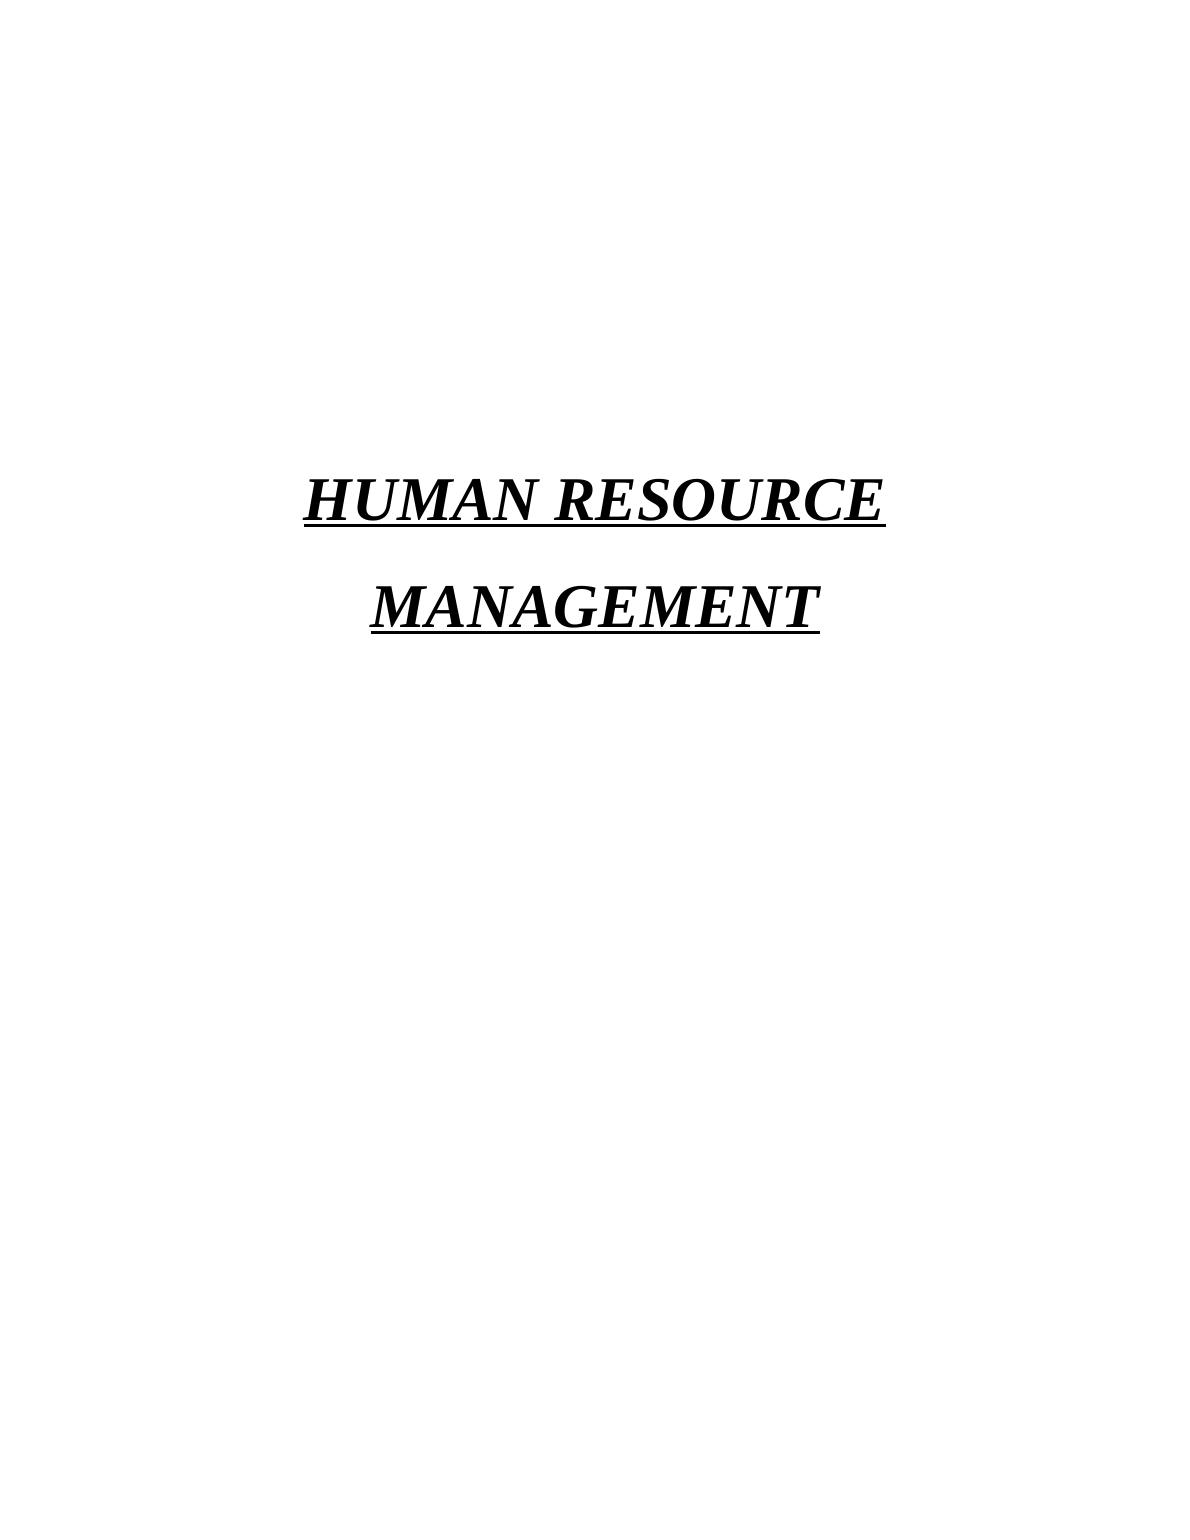 DOC Human Resource Management - Assignment_1